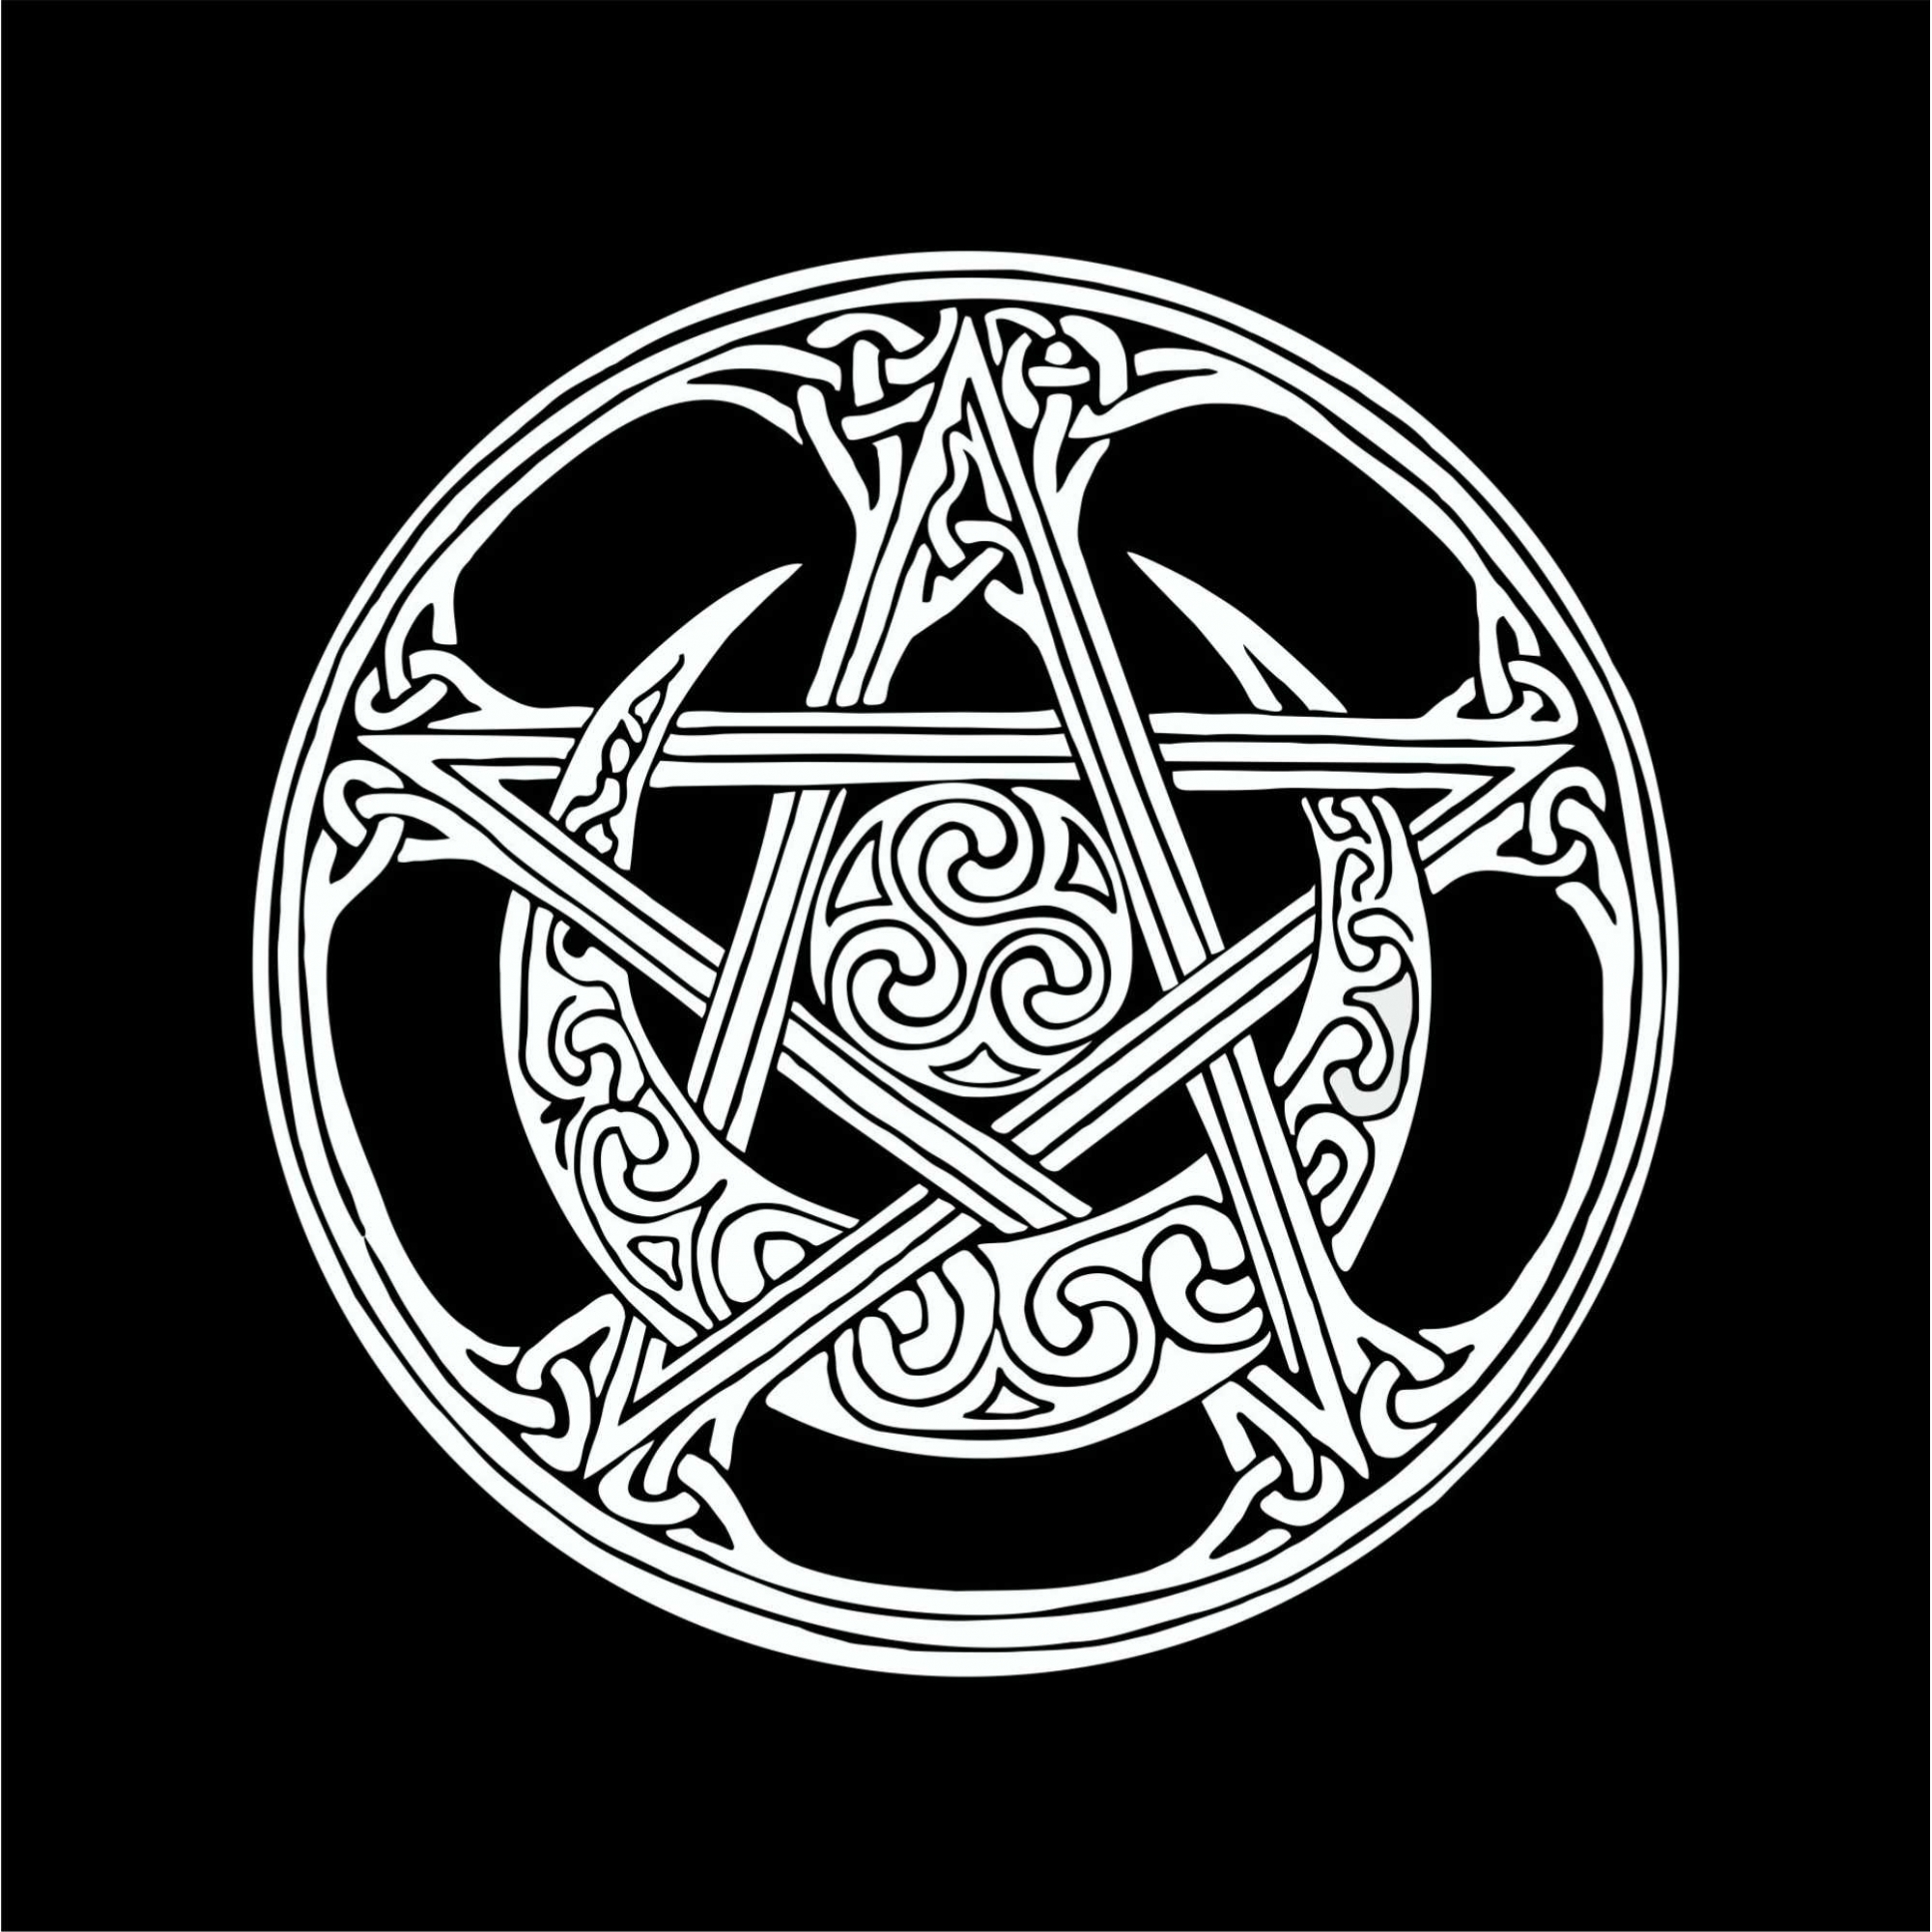 Toalha Pentagrama  Celta  -  Zots